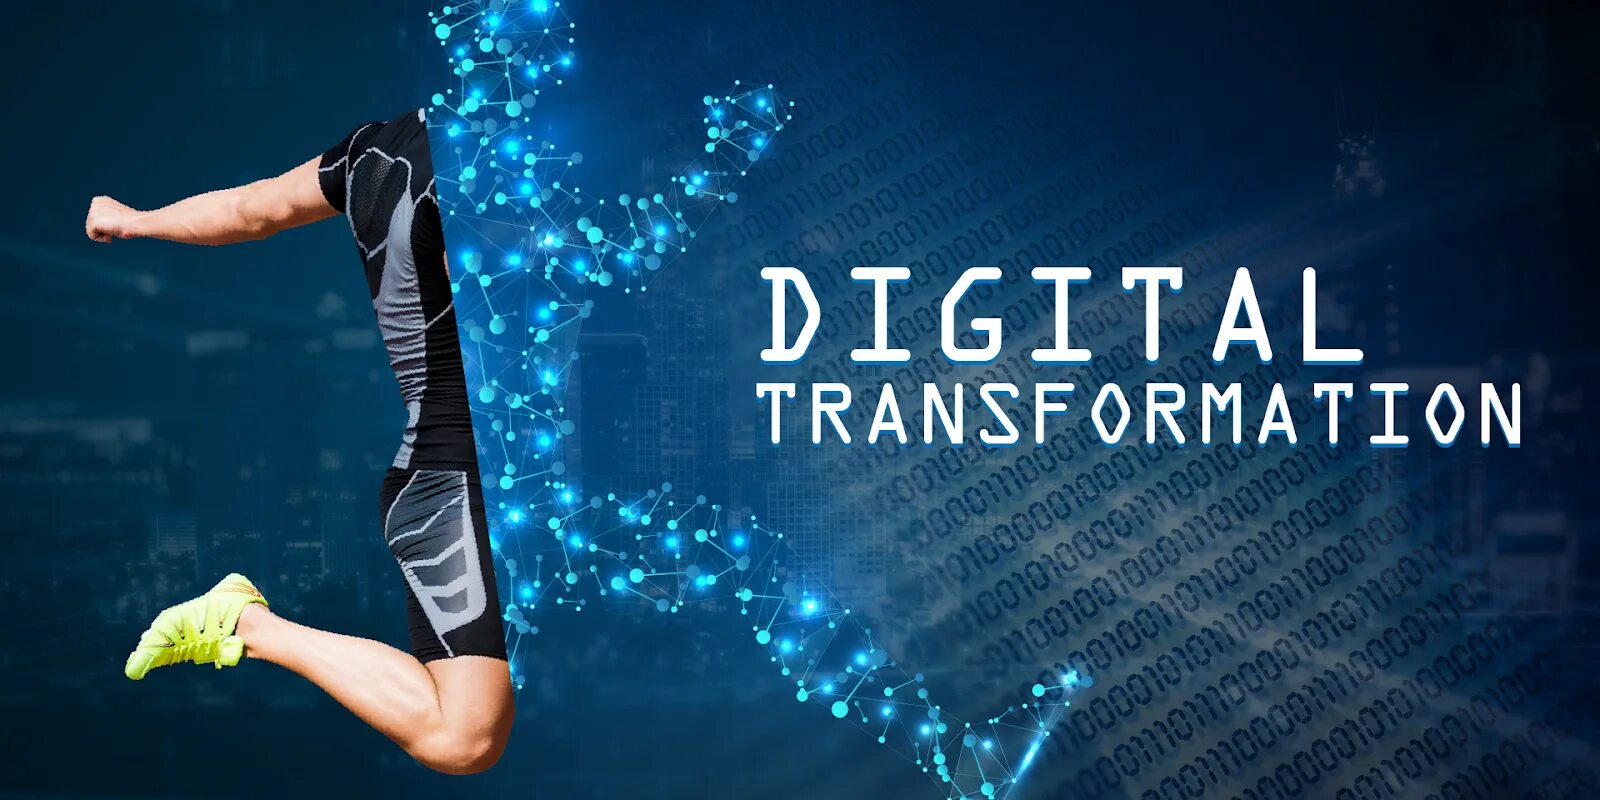 Digi sports 2. Цифровая трансформация. Диджитал трансформация. Цифровизация трансформация. Слоган цифровой трансформации.